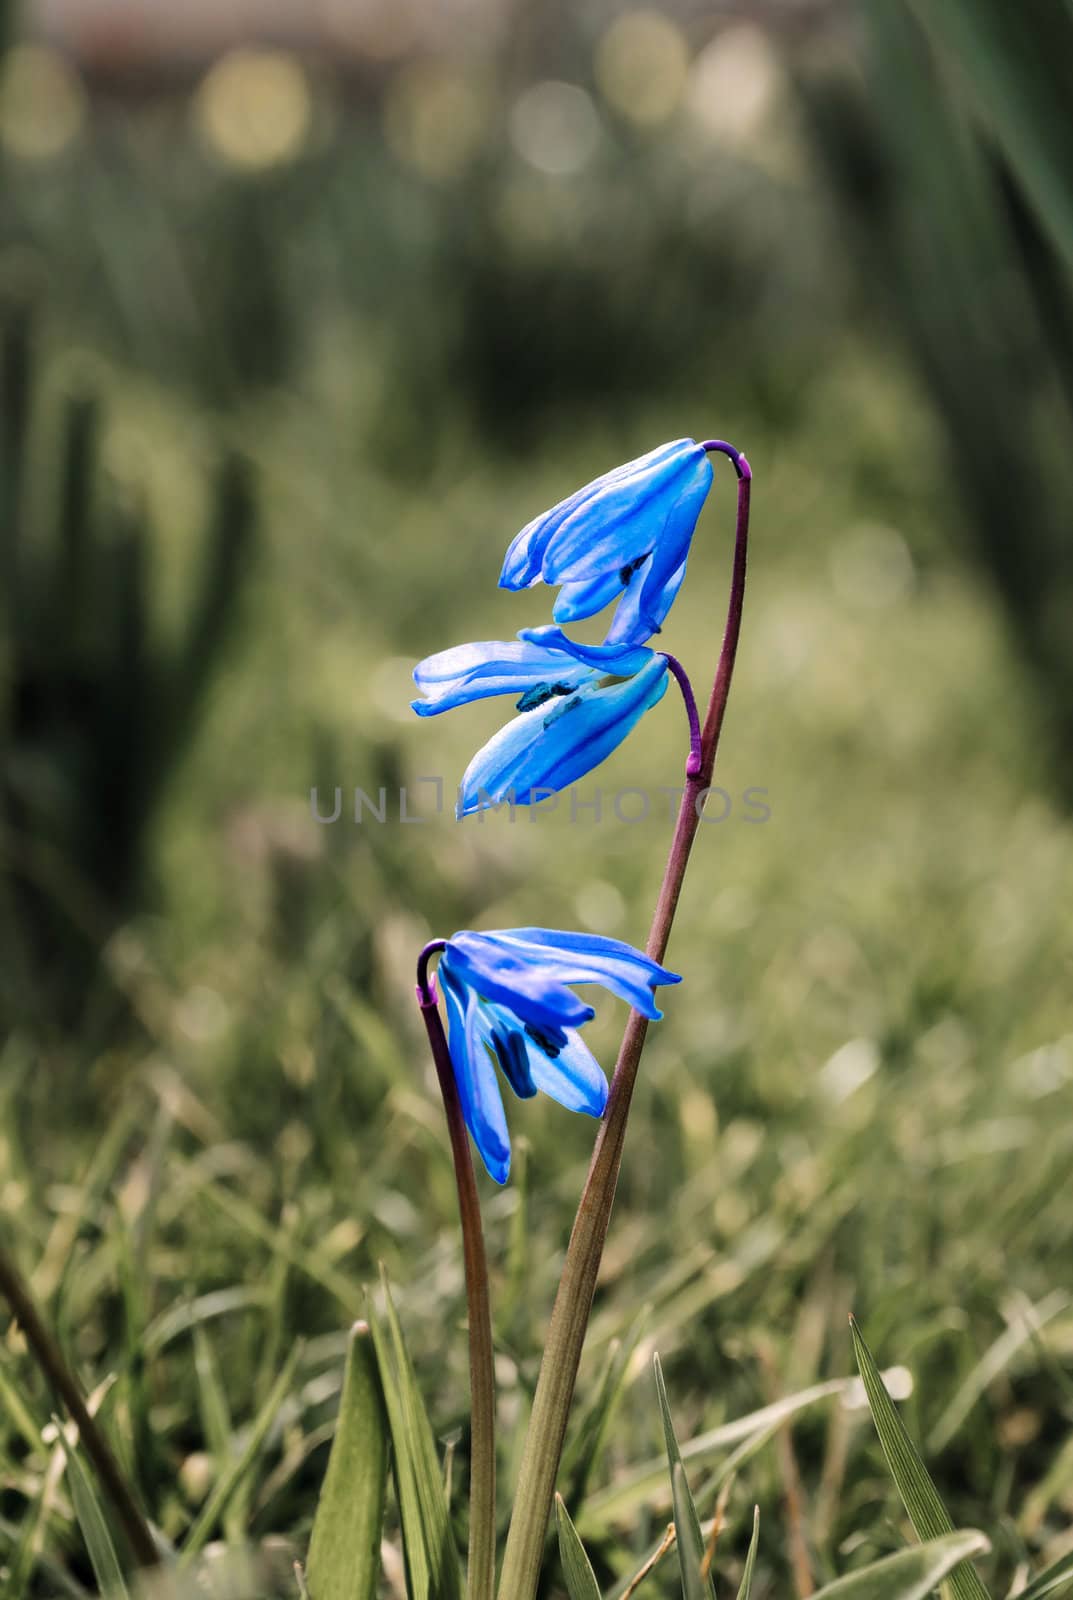 Dainty blue flower